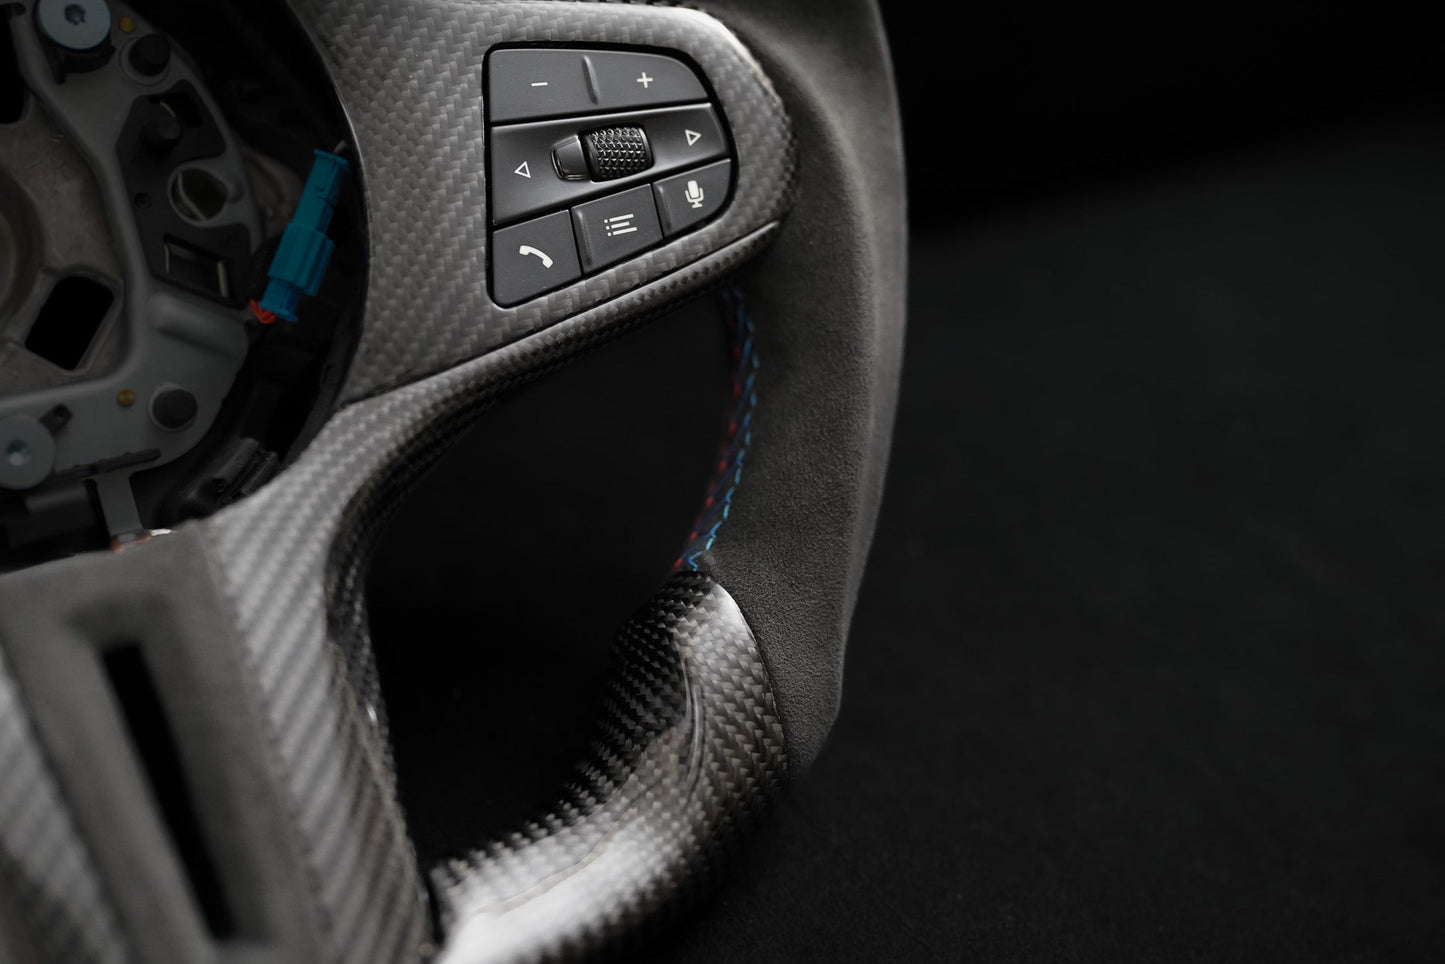 BMW Alcantara Flat Bottom Carbon Fiber Steering Wheel for G Chassis- iCBL's Signature Design for G20 G30 G80 G82 F90 M3 M4 M2 M340i M8 - iCBL